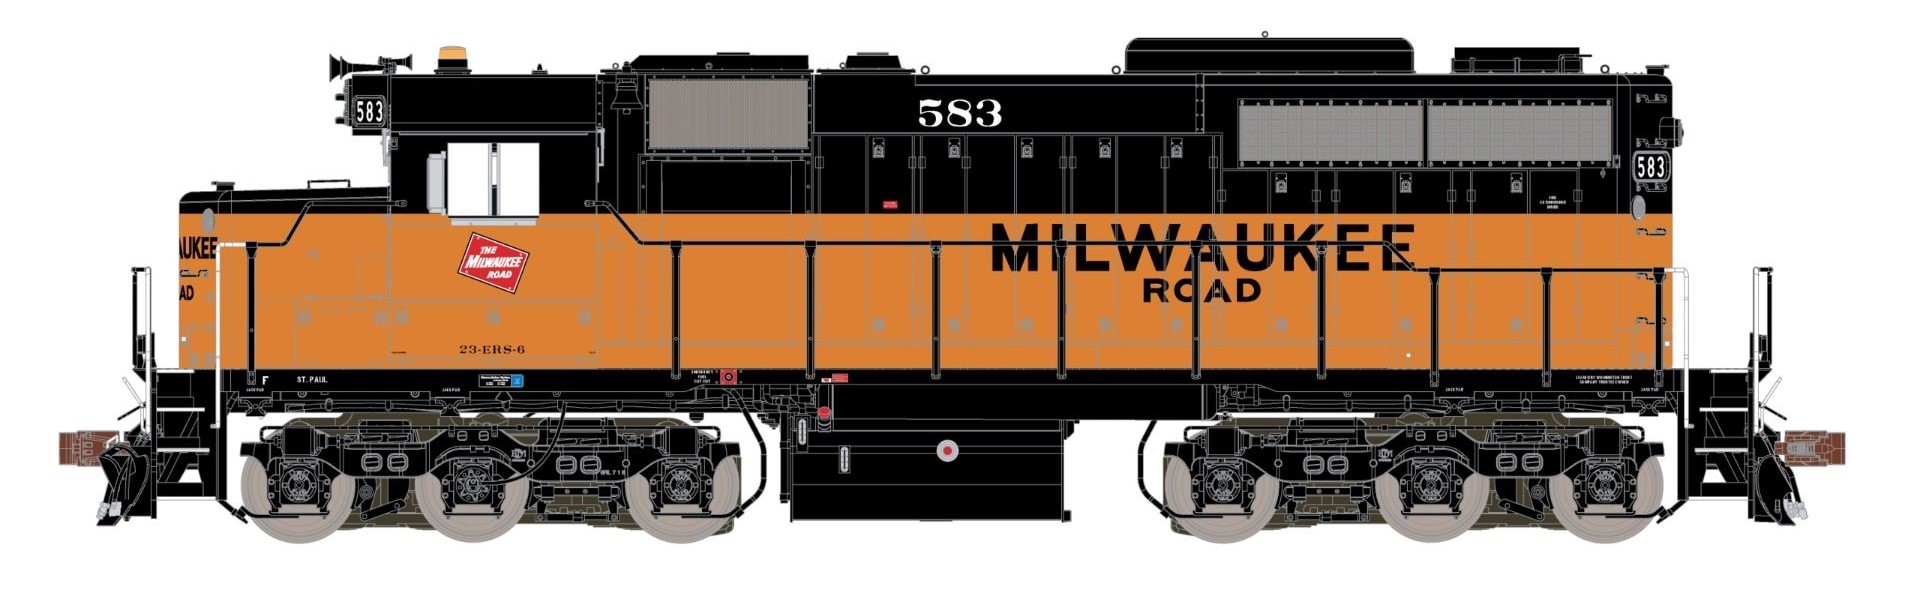 ScaleTrains Museum Quality HO SXT70069 DCC/ESU LokSound V5 Equipped EMD SDL39 Locomotive Milwaukee Road 'Billboard Lettering' MILW #589